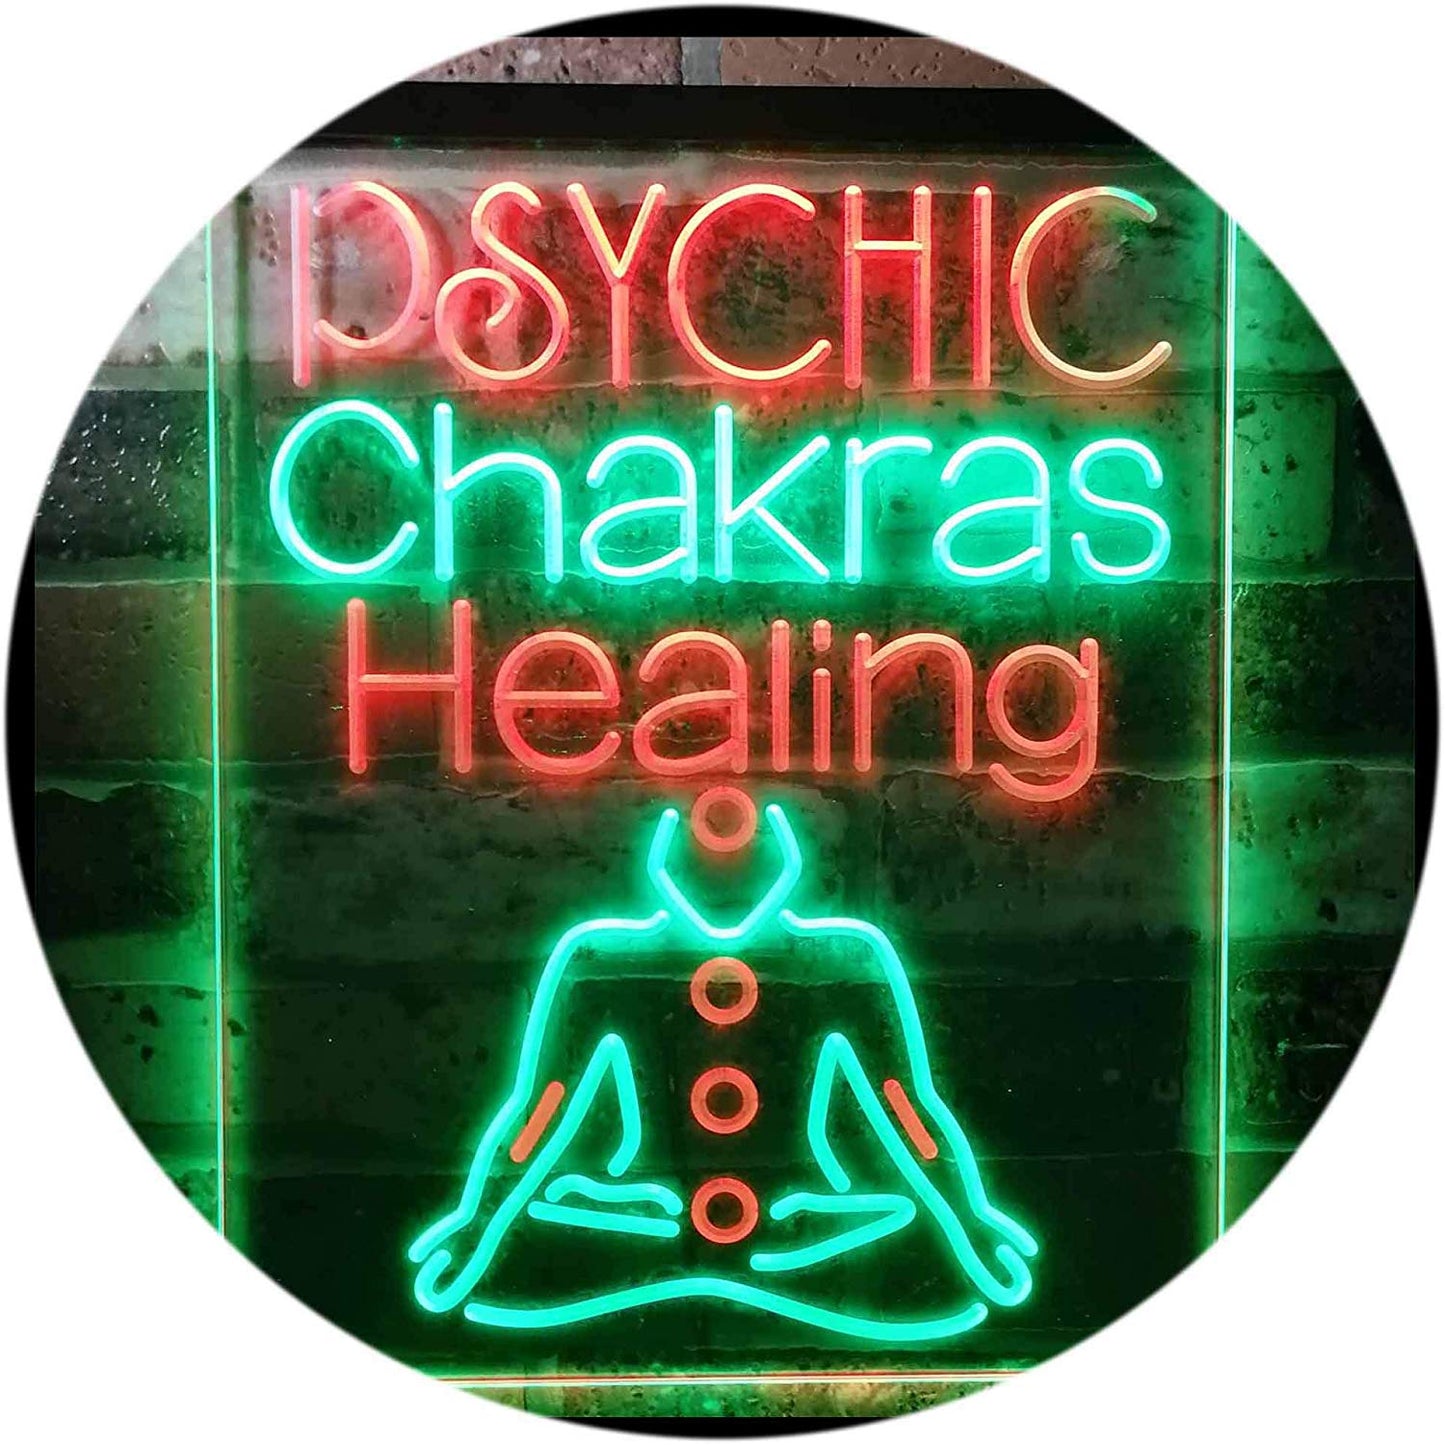 Psychic Chakras Healing LED Neon Light Sign - Way Up Gifts